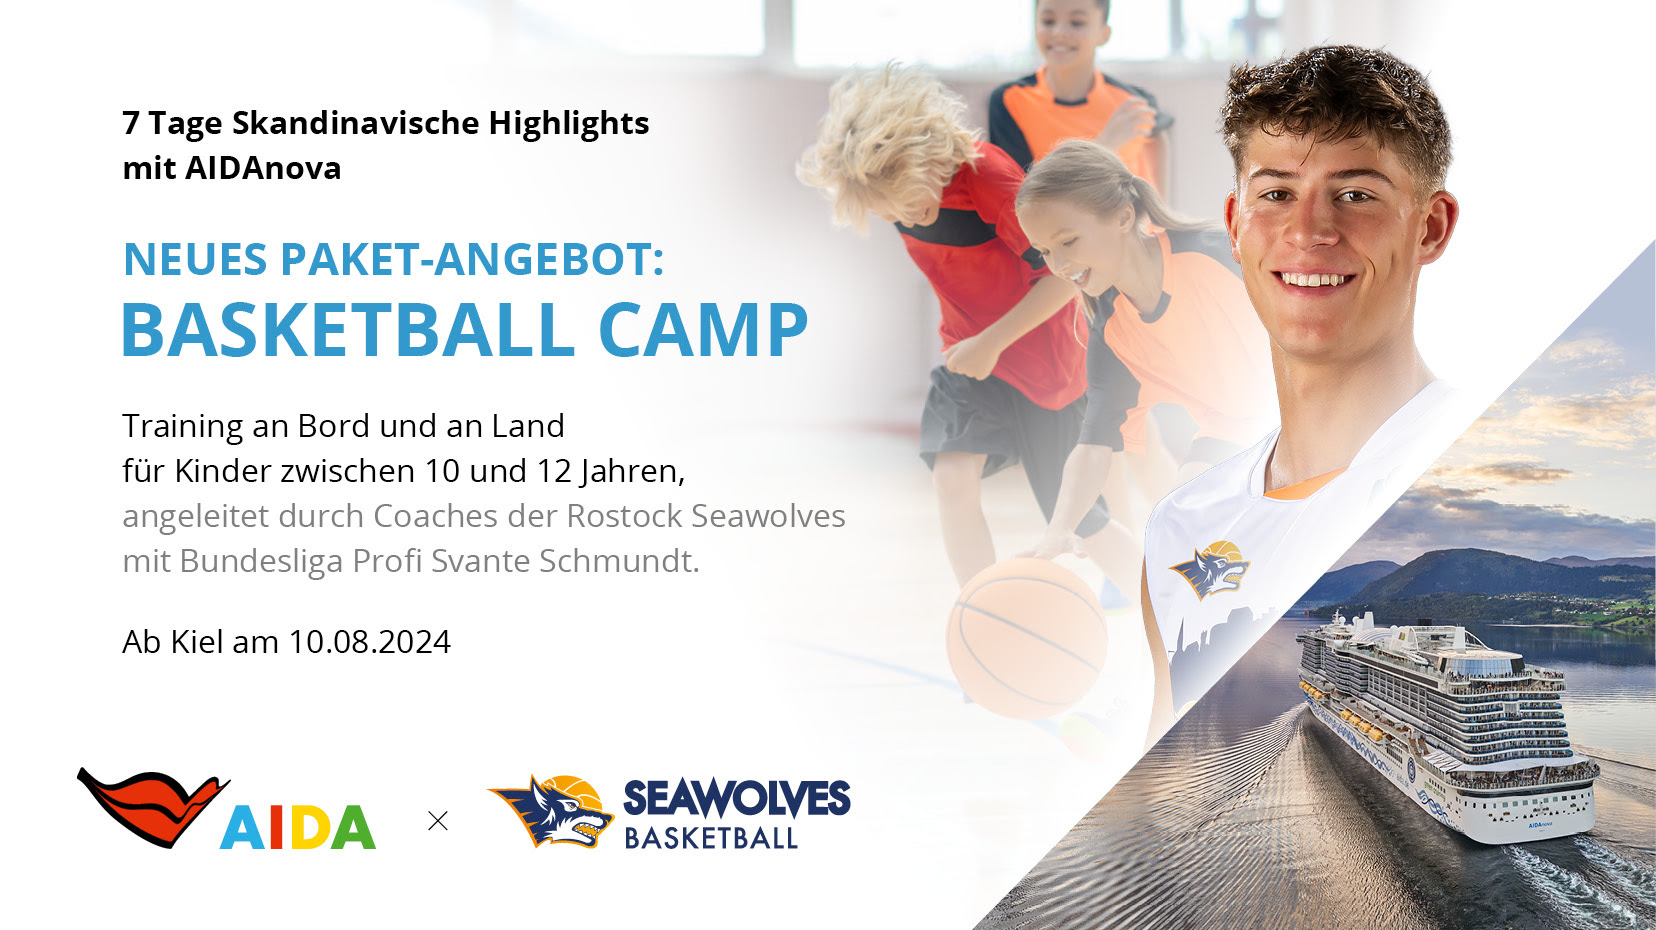 Seawolves Basketball Camp auf AIDAnova